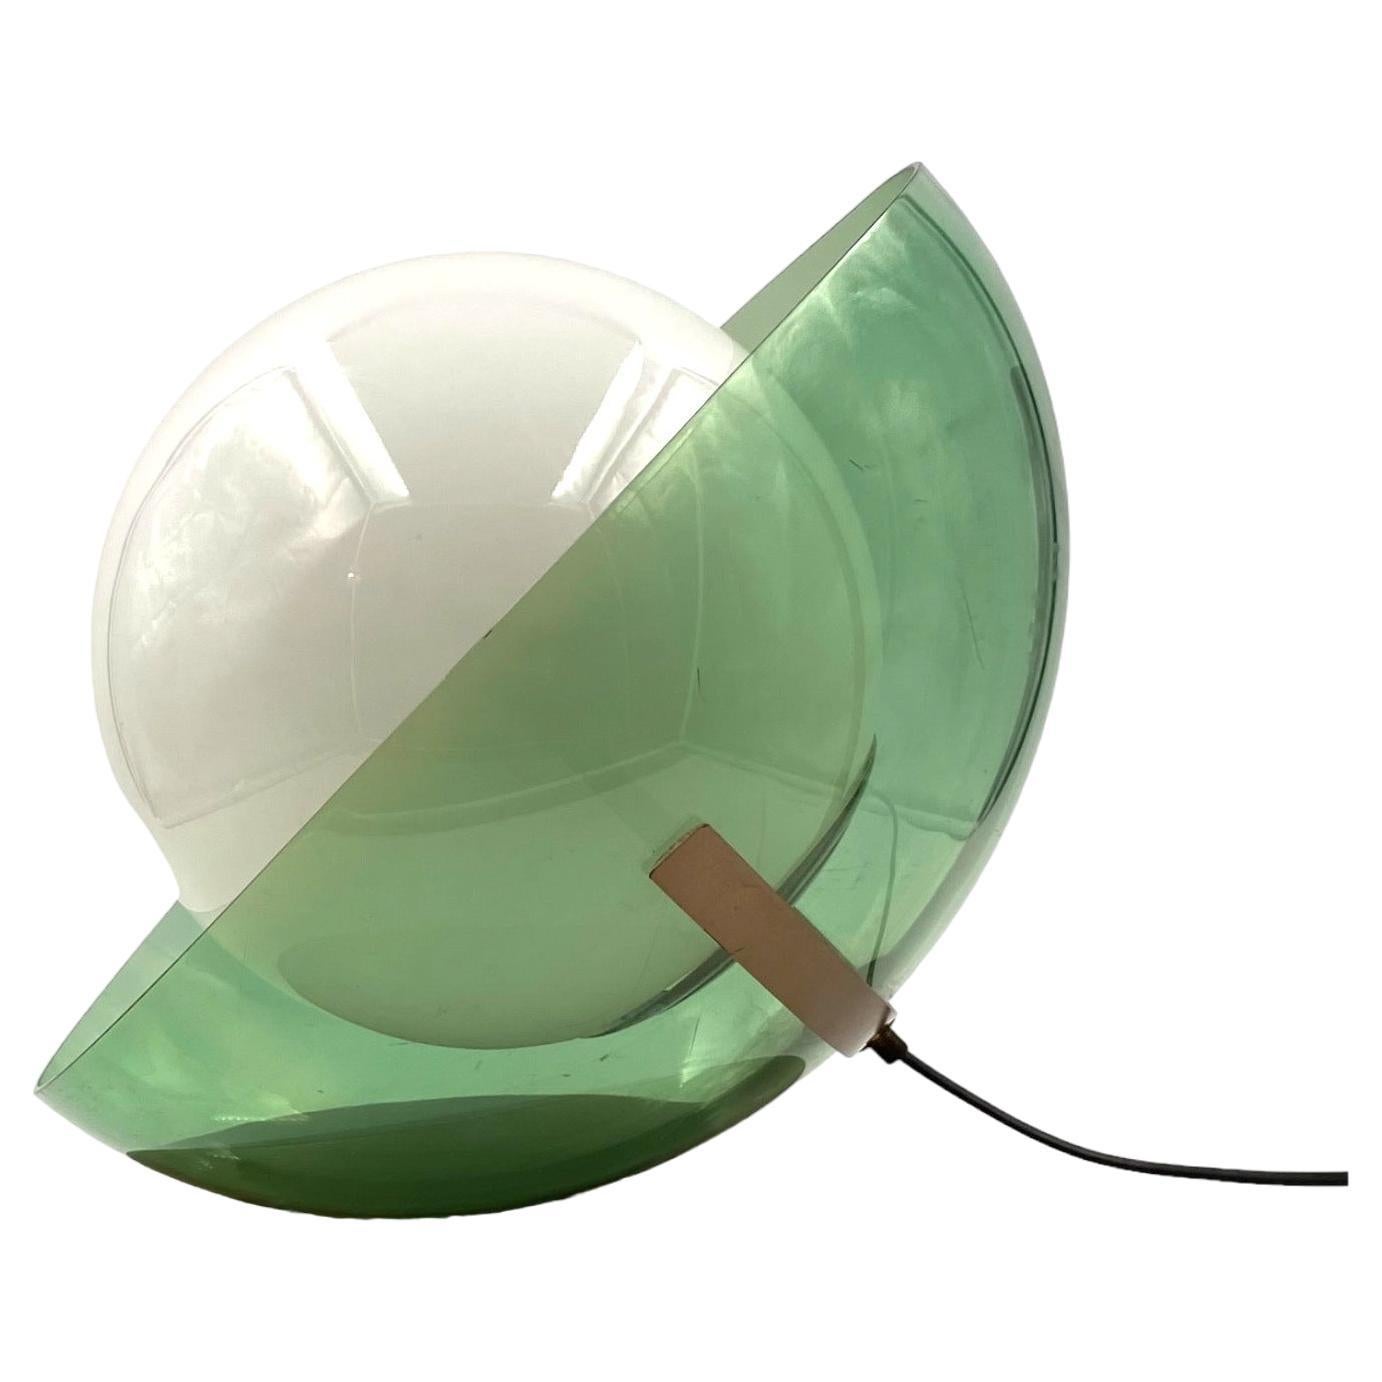 Lampe de table verte Space Age, Stilux Italie, 1970